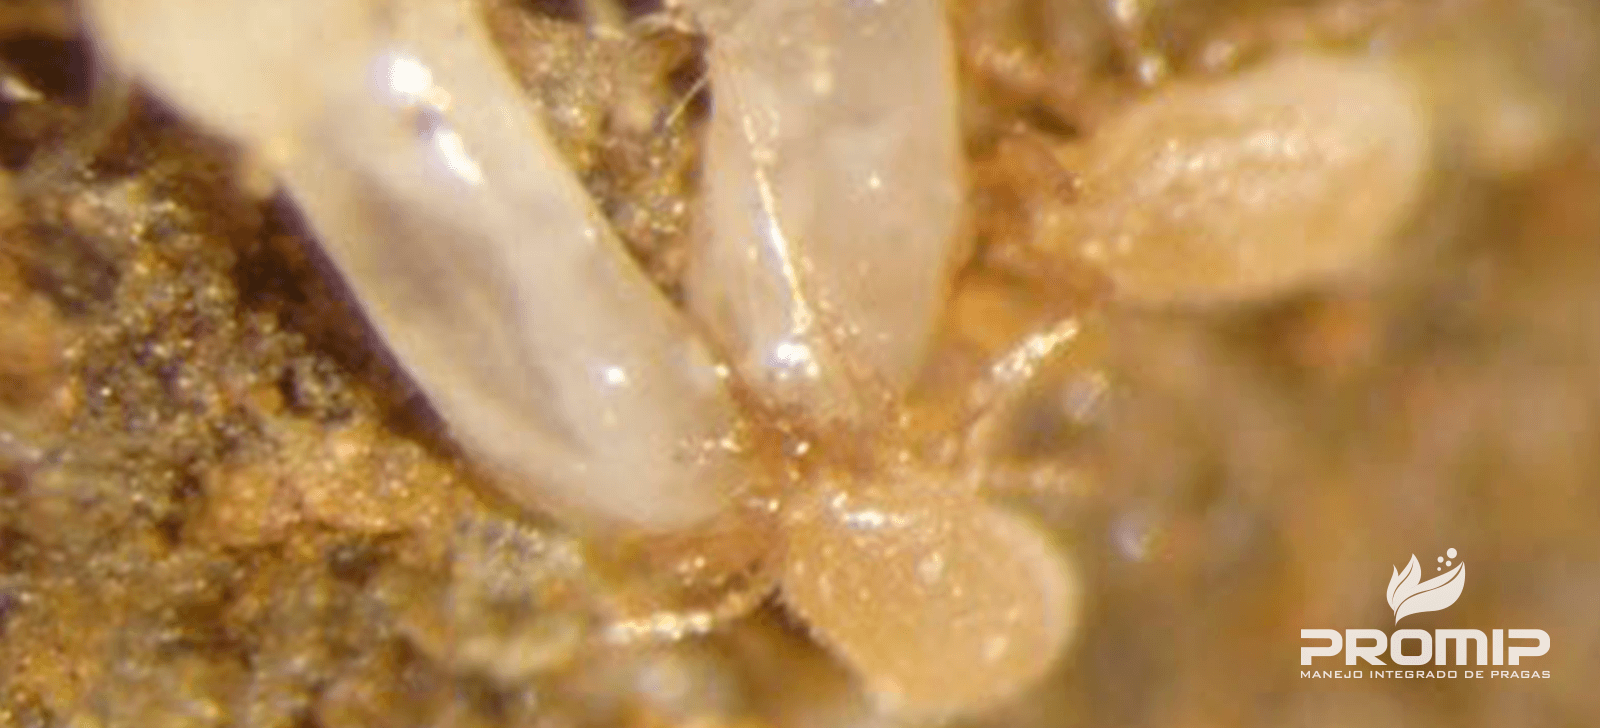 promip manejo integrado de pragas controle biologico adultoacro predador consumindo larva